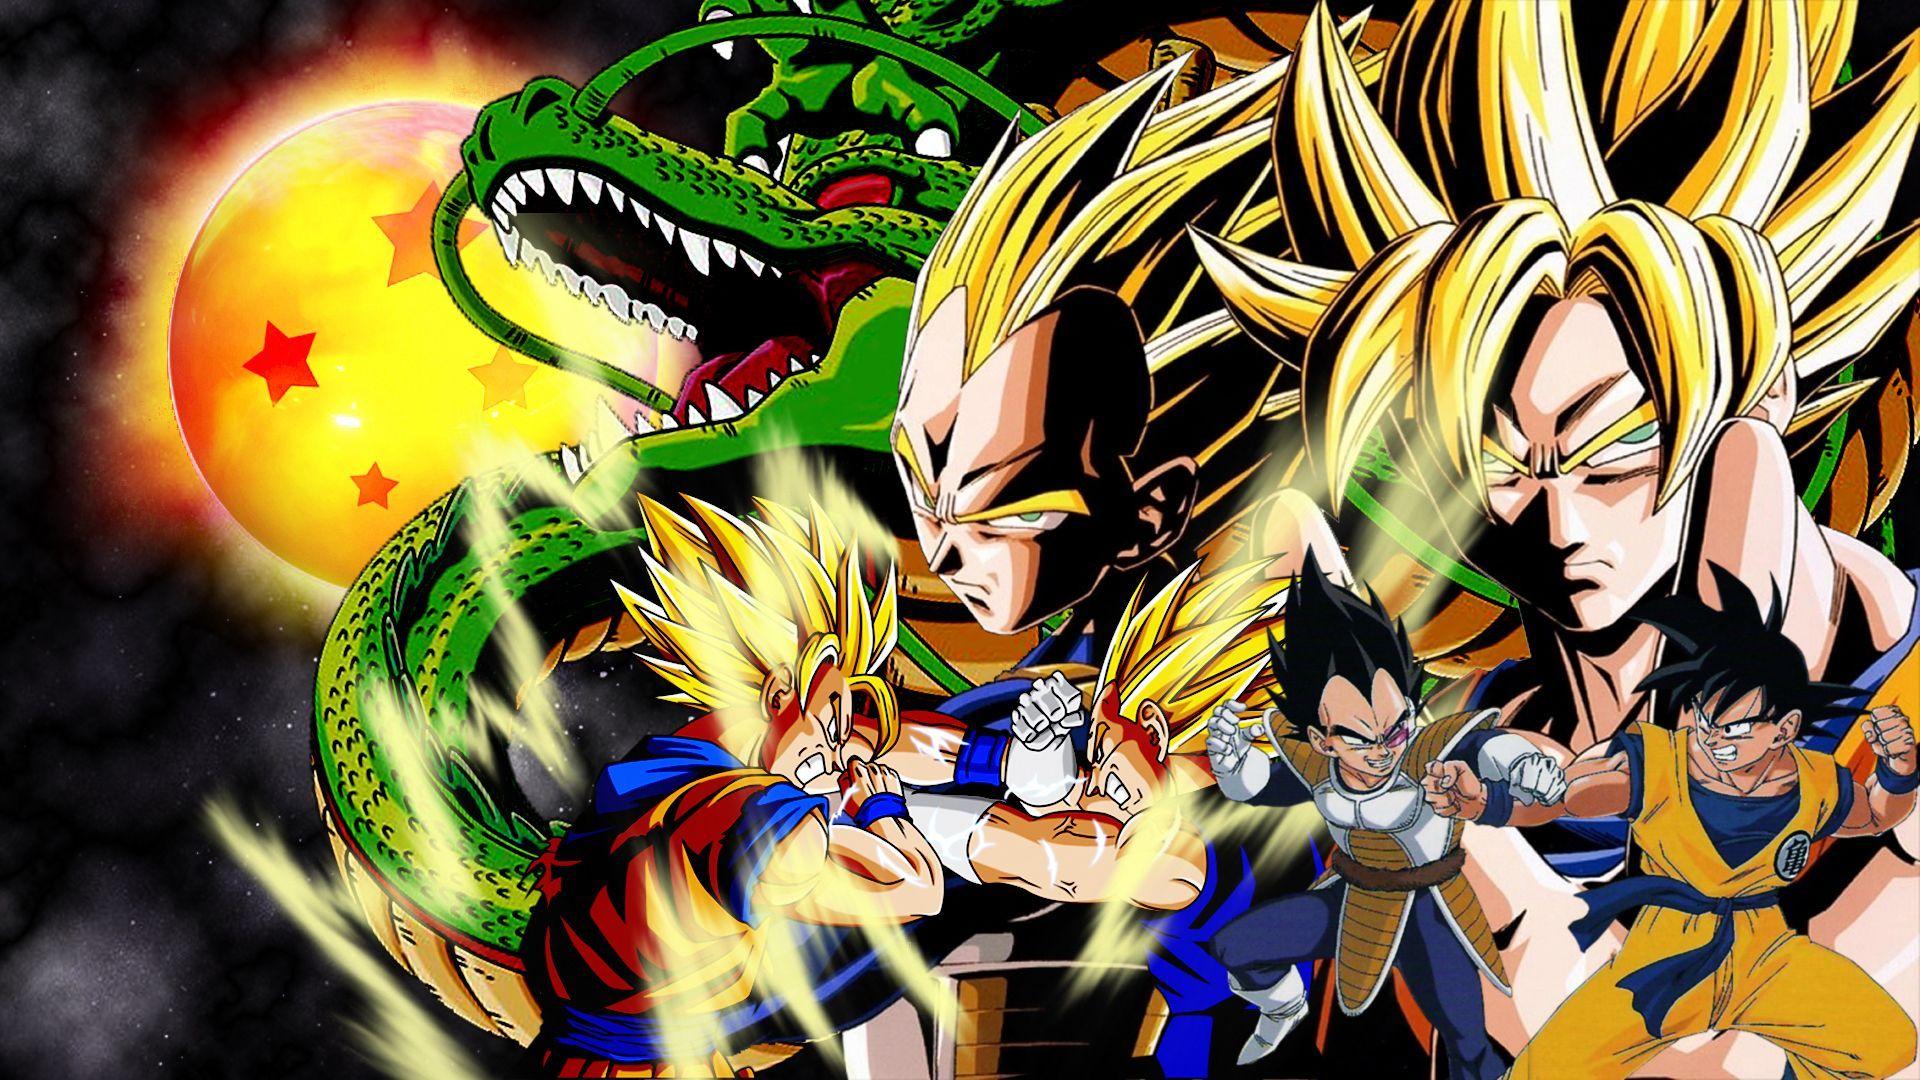 dbz goku vs vegeta. Goku wallpaper, Dragon ball super wallpaper, Dragon ball art